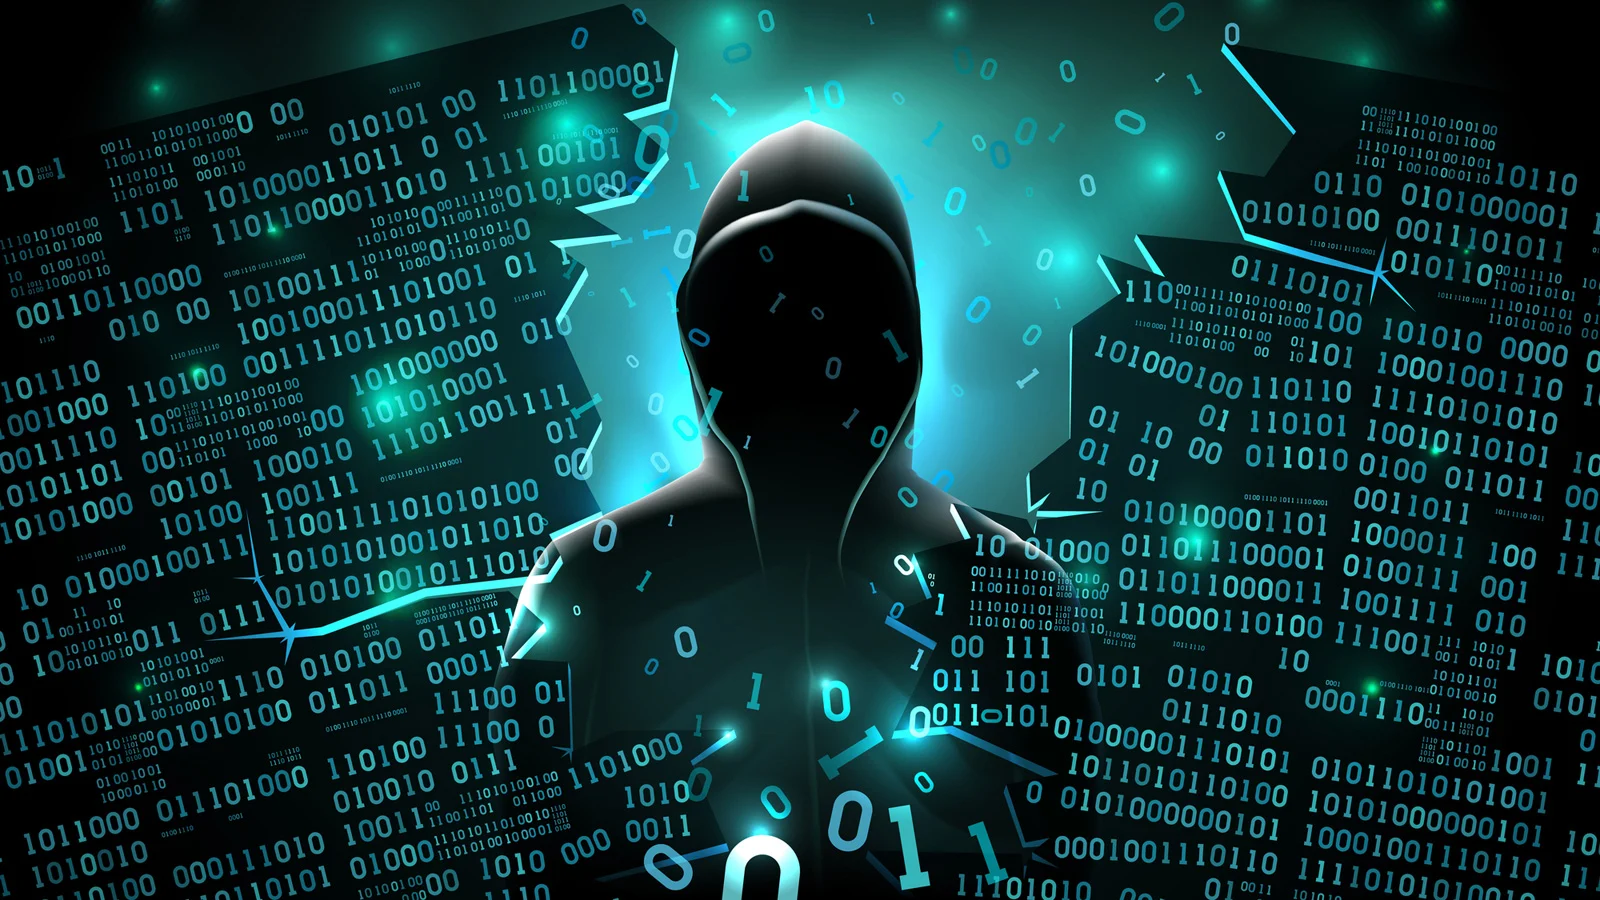 hacker ripped data